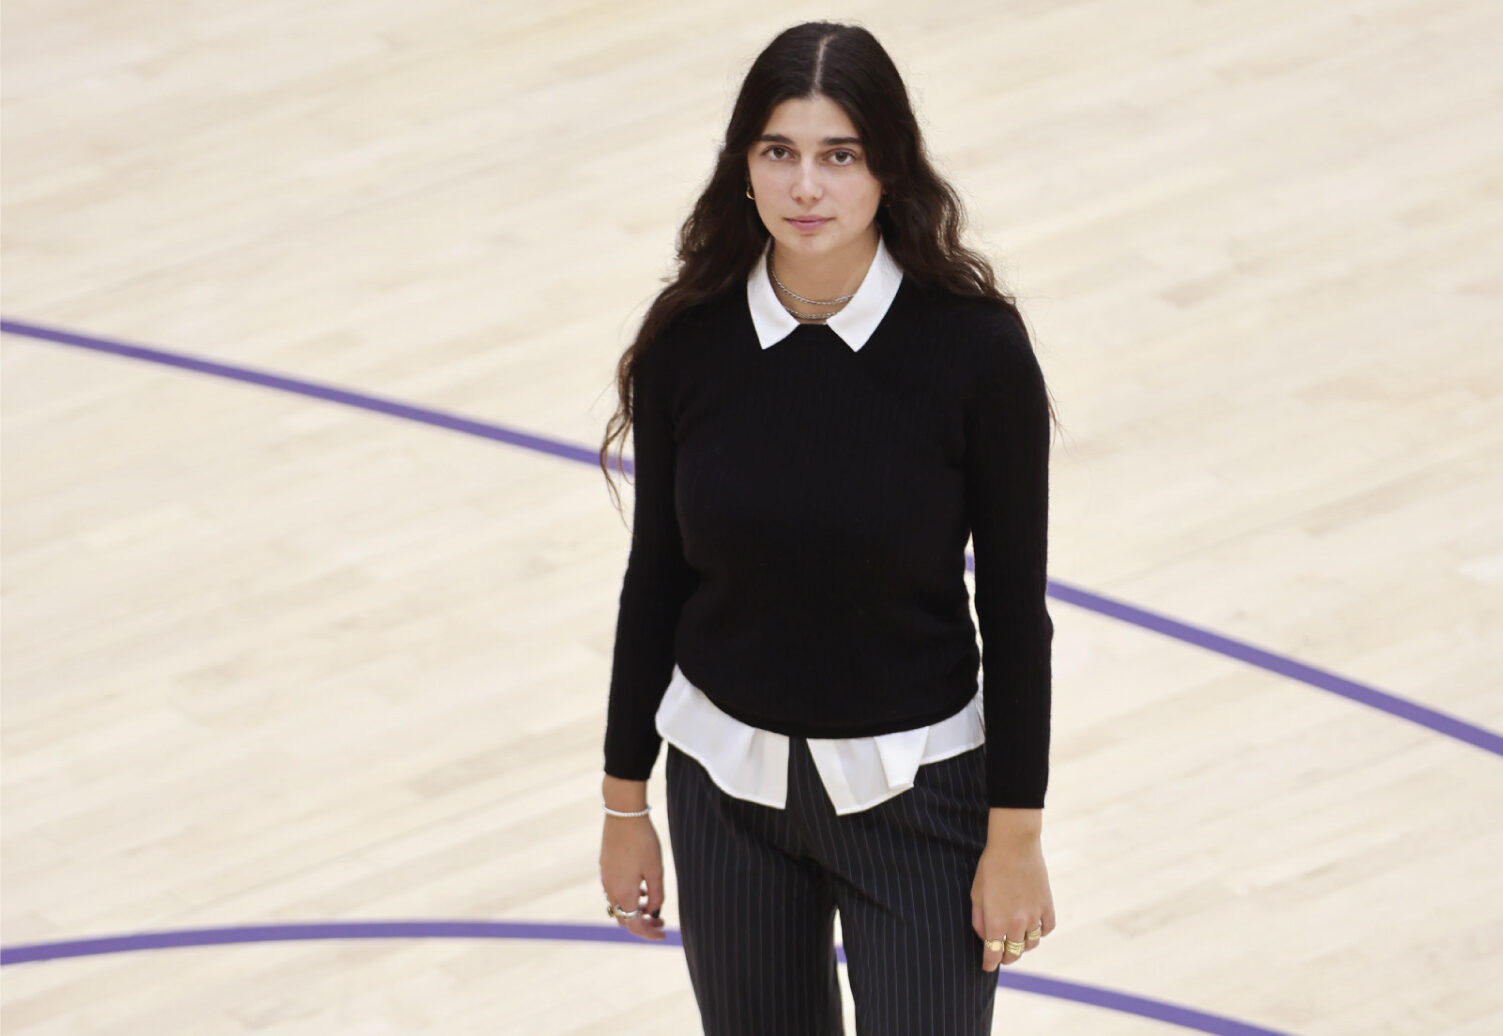 Bella Carino standing on a basketball court